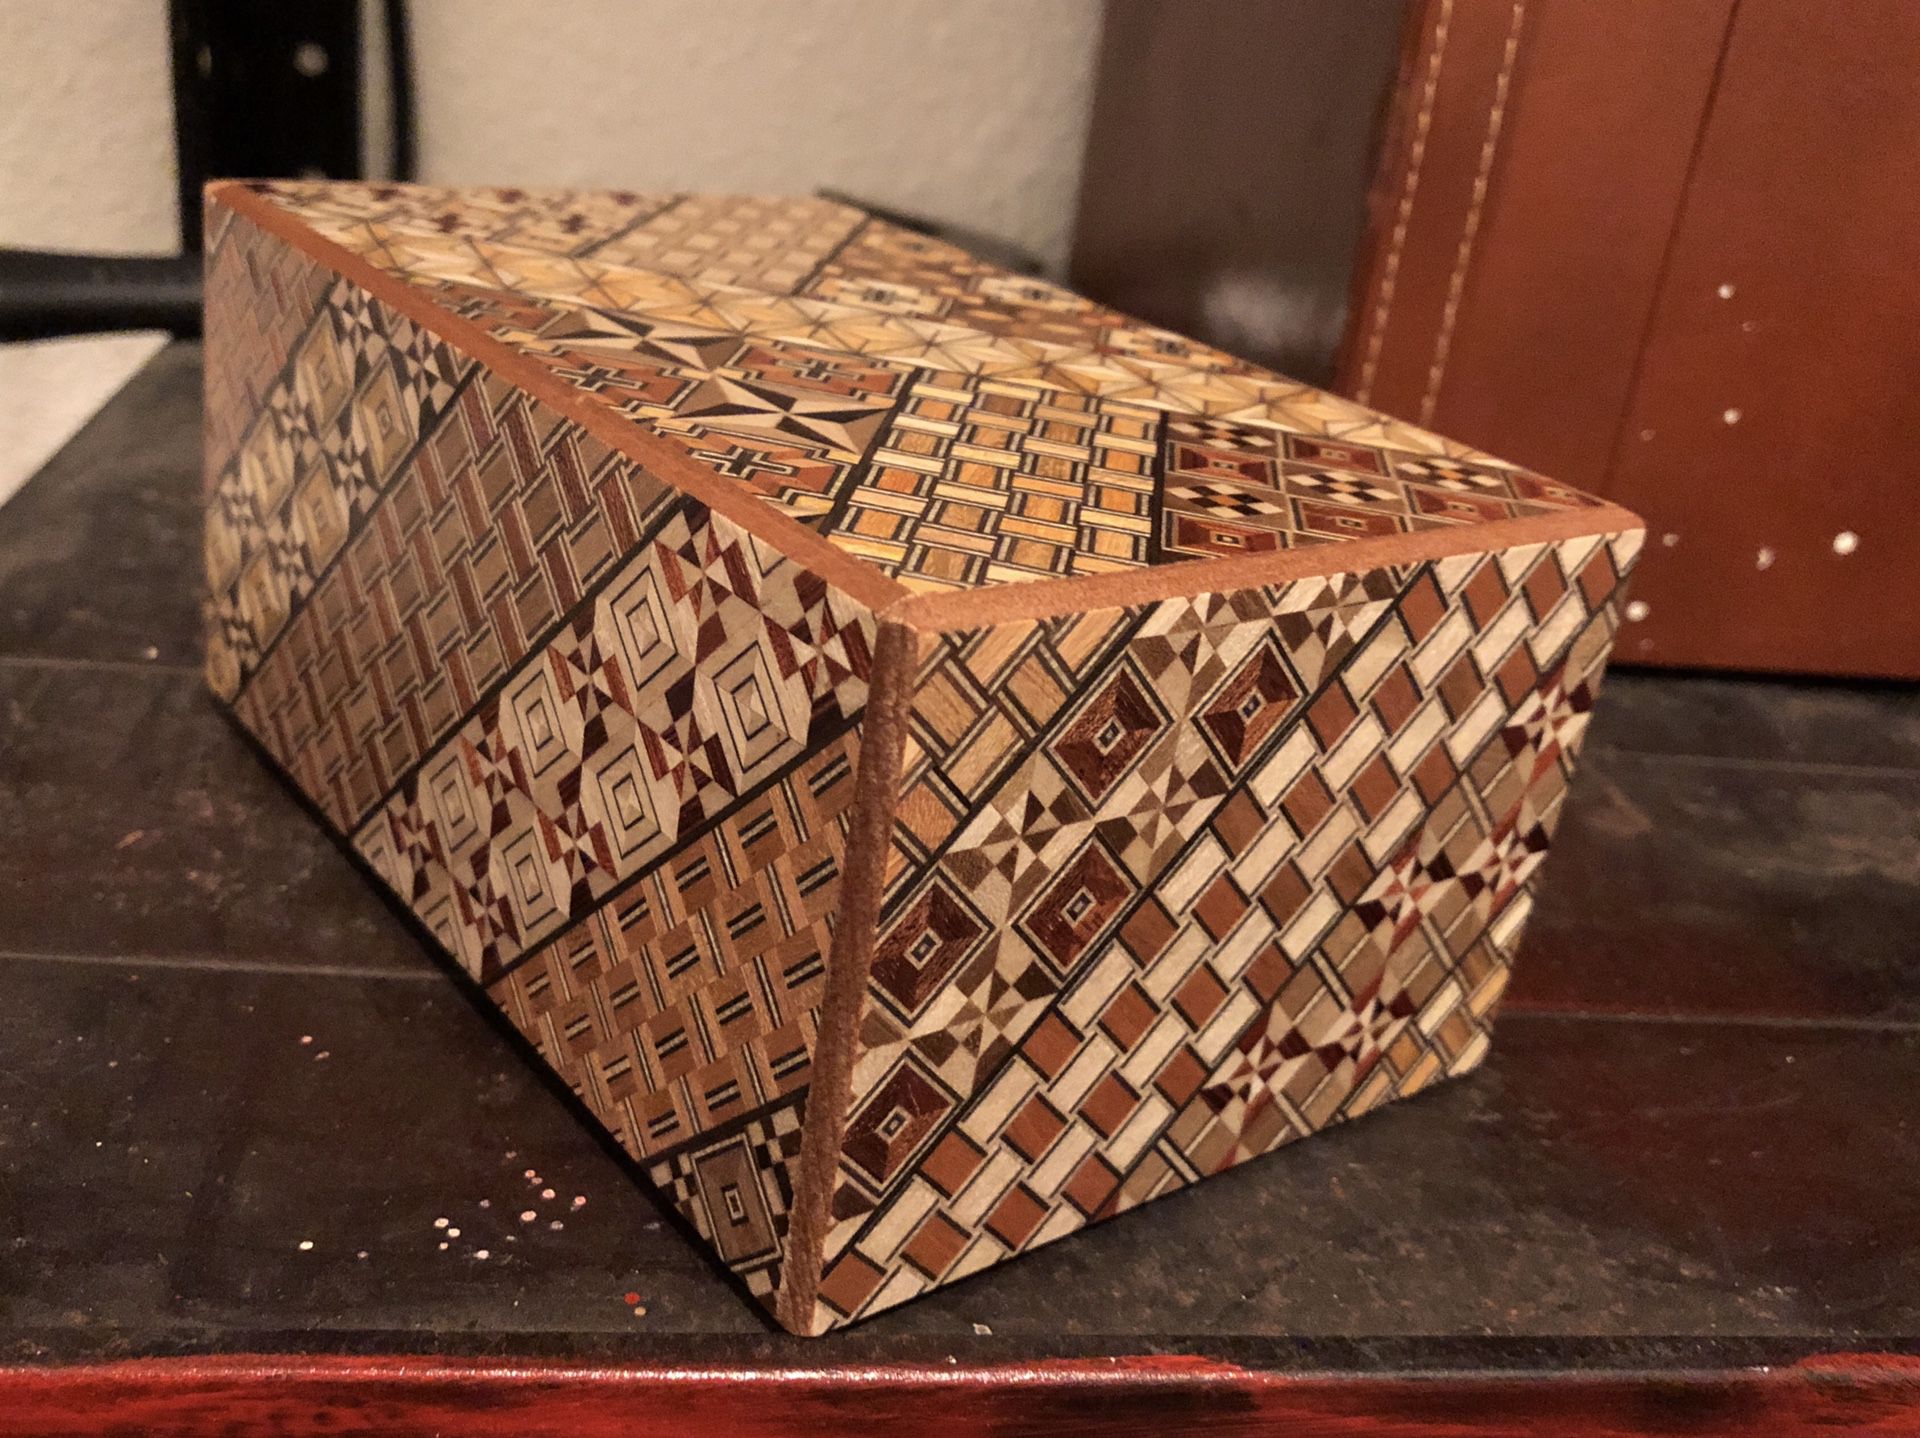 Vintage Japanese Puzzle Box w/ interior nesting box and secret drawer